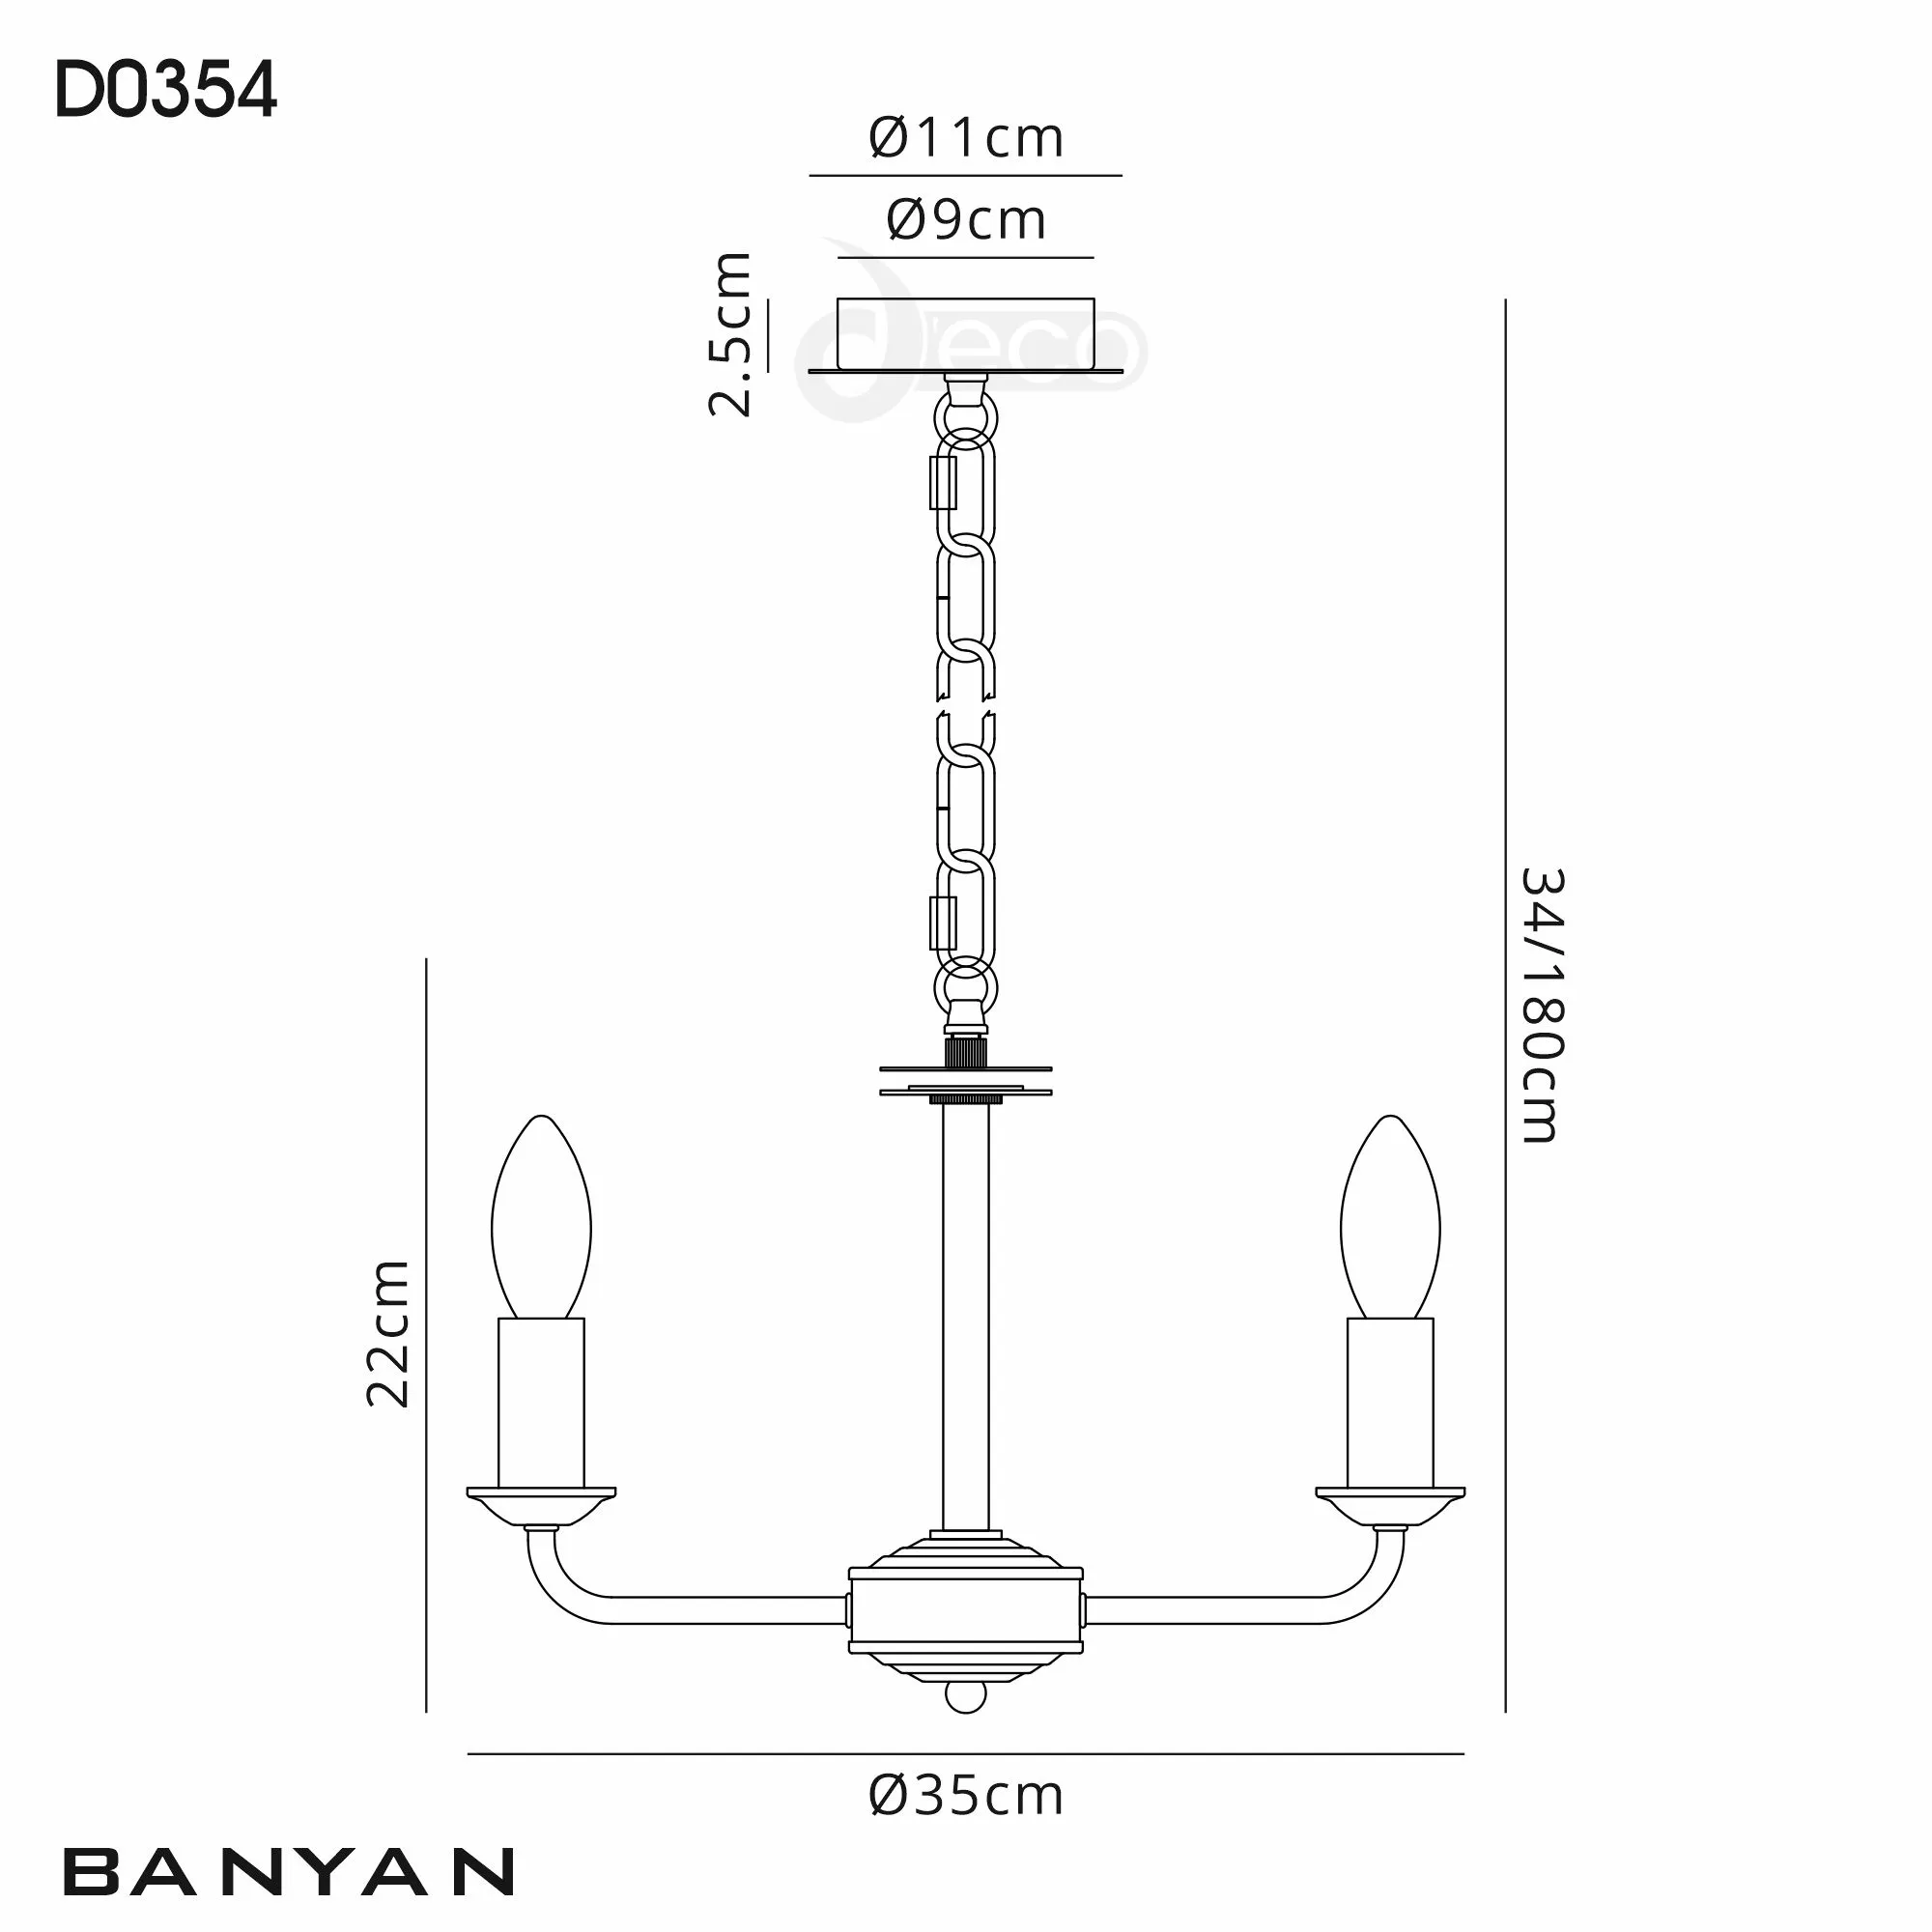 Banyan 45cm 3 Light Pendant Polished Chrome; Cream DK0857  Deco Banyan CH CR